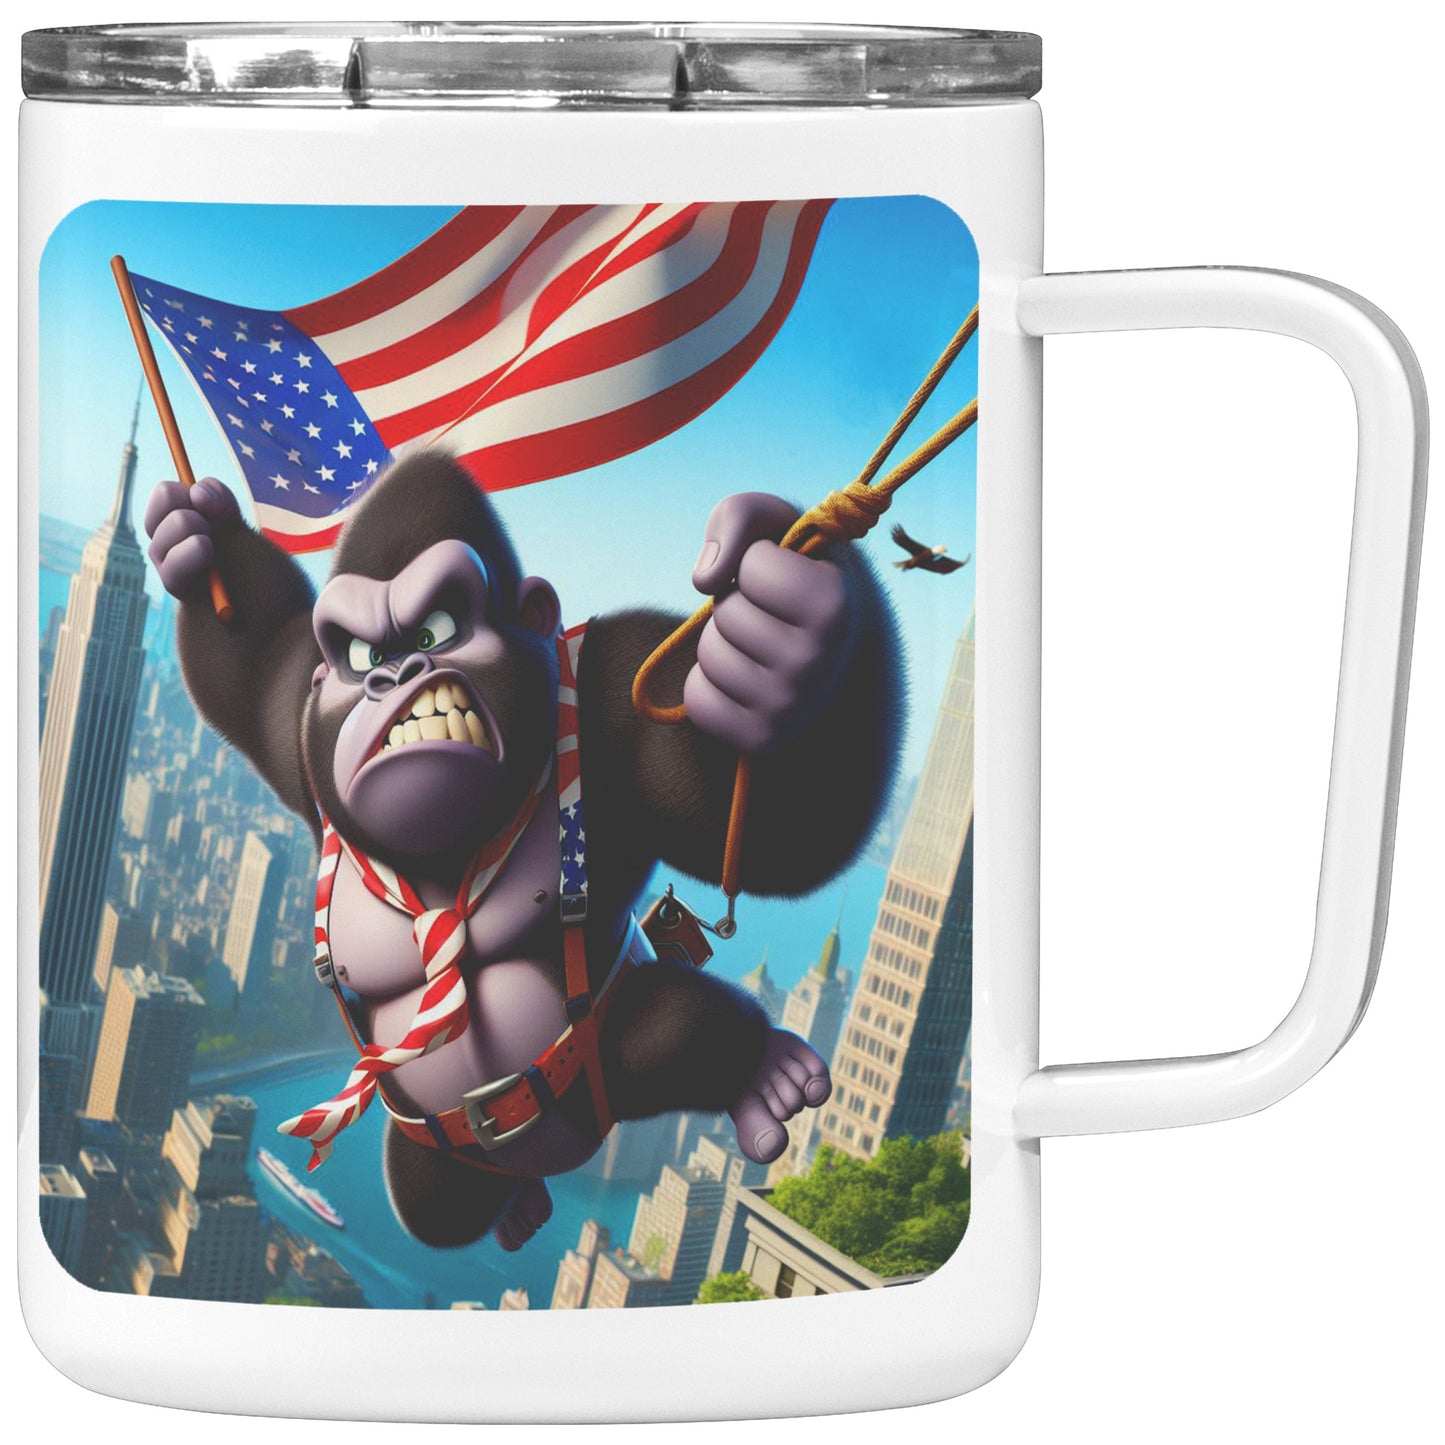 Grumpy Gorilla - Insulated Coffee Mug #40